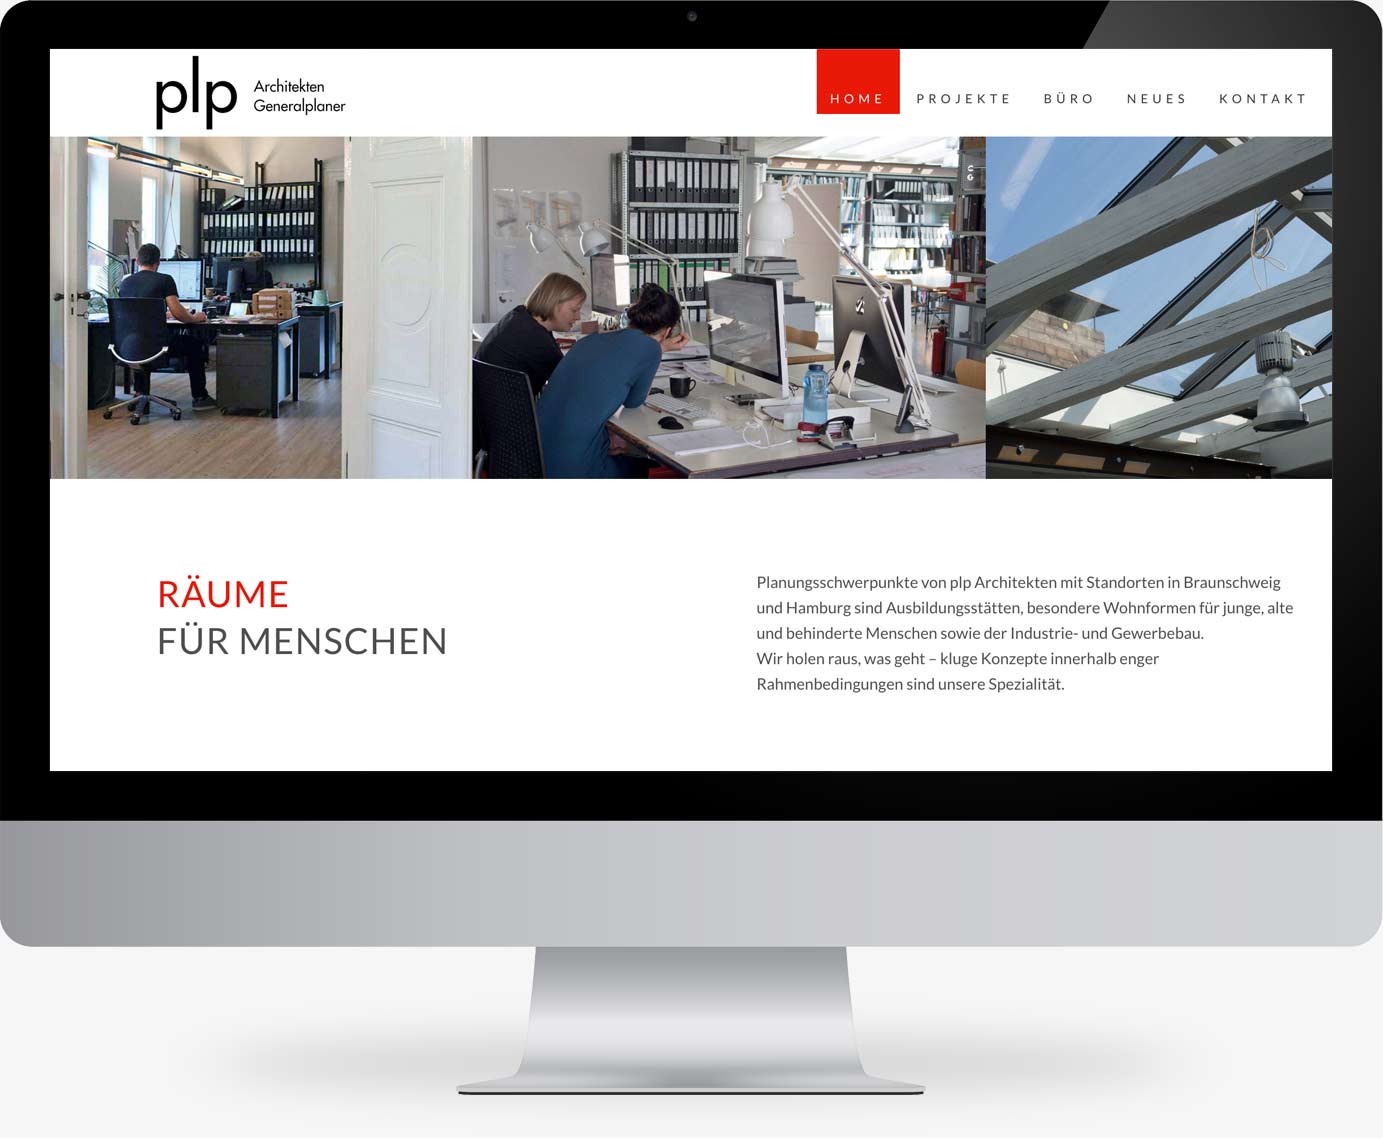 plp_architekten_webdesign.jpg